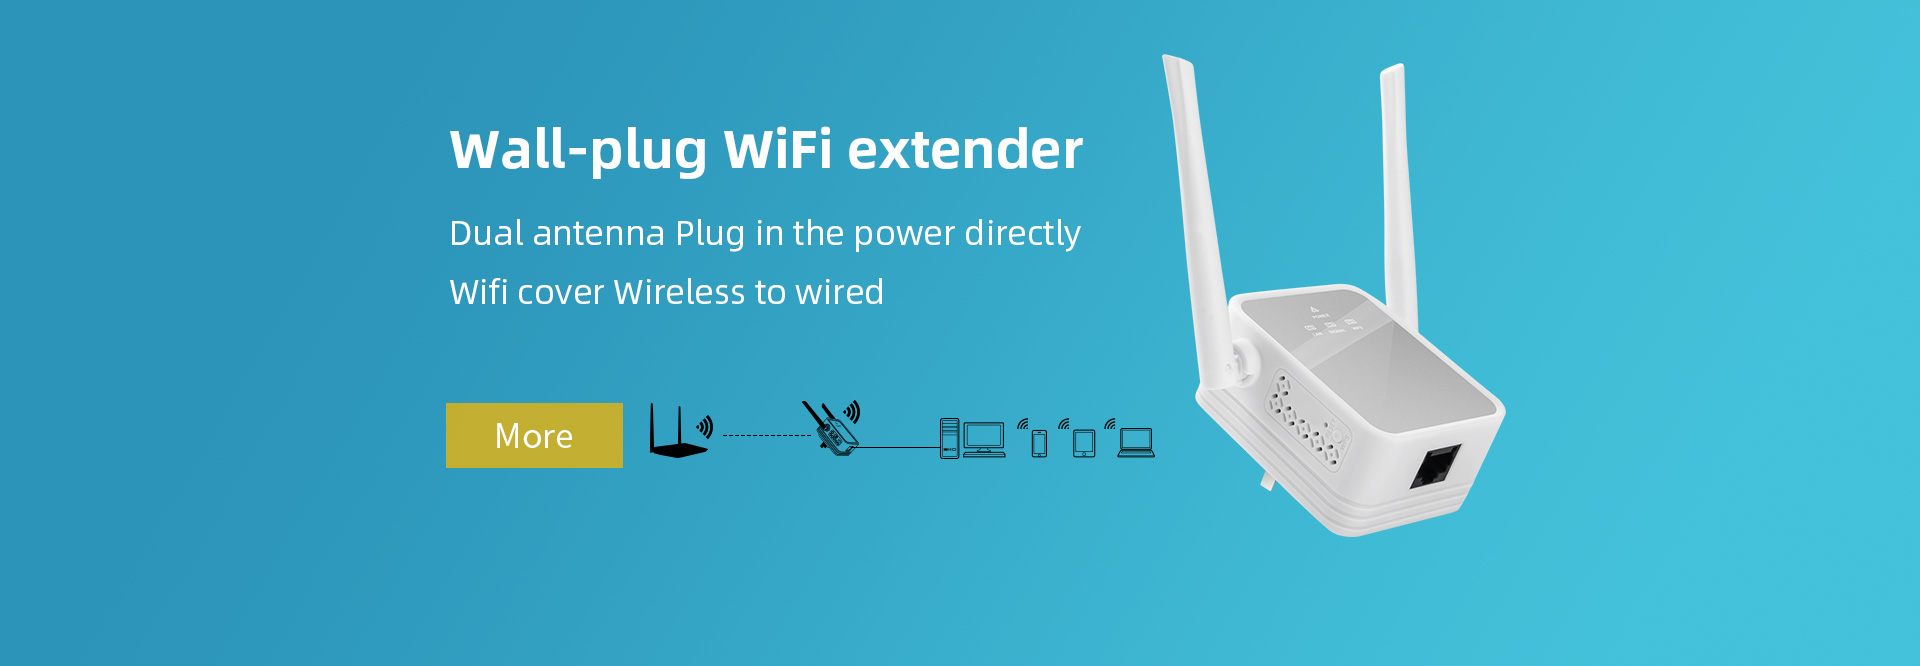 Wall-plug WiFi extender